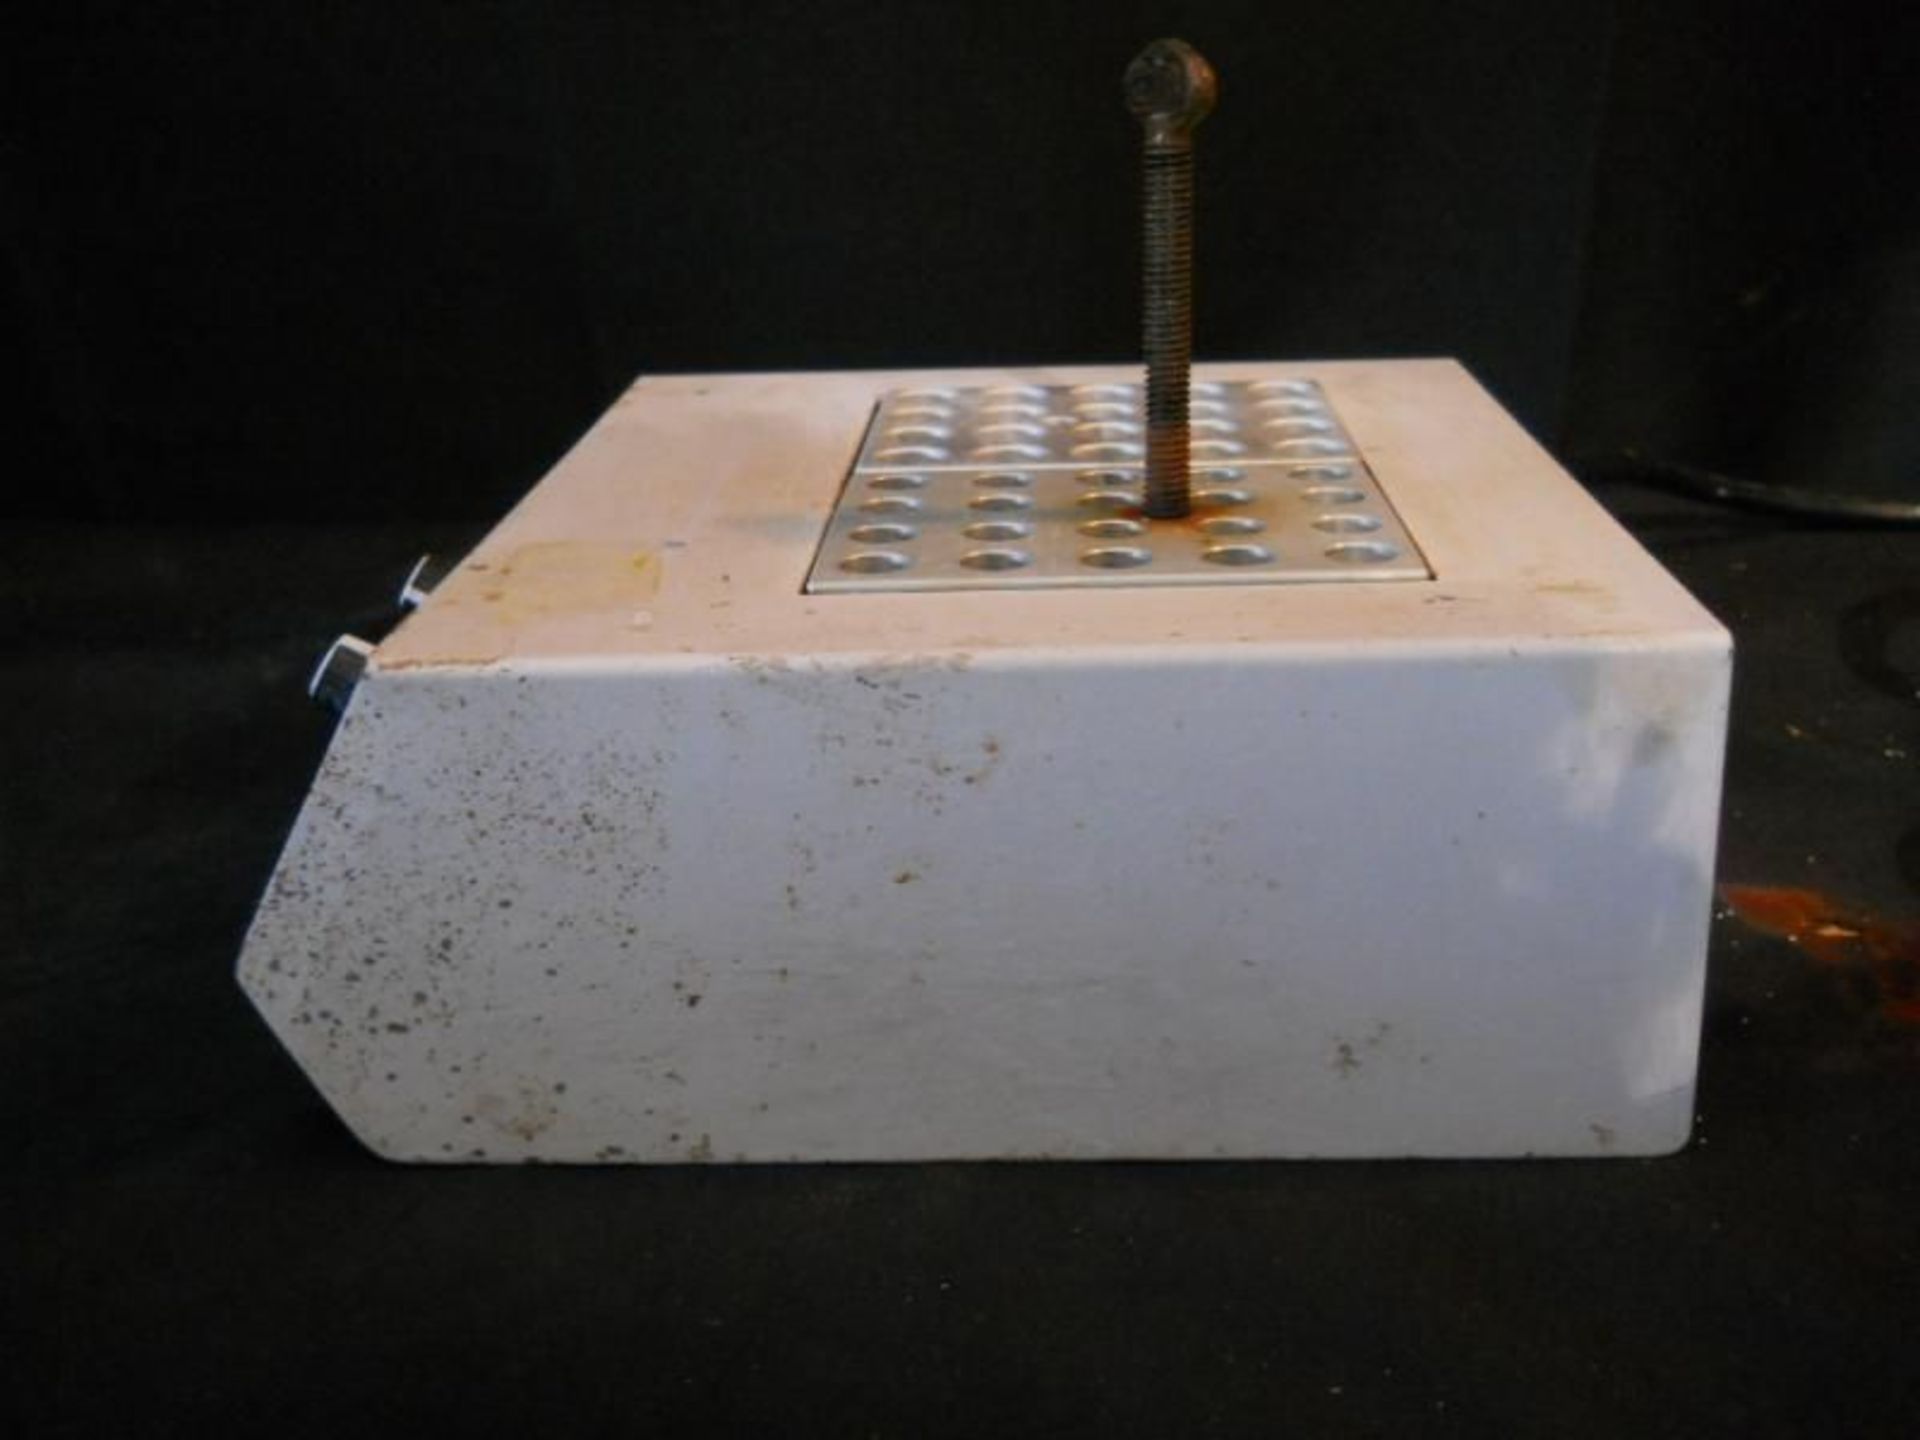 Lab-Line Instruments Multi-Blok (Block) Heater Model 2052, Qty 1, 330960122843 - Image 4 of 7